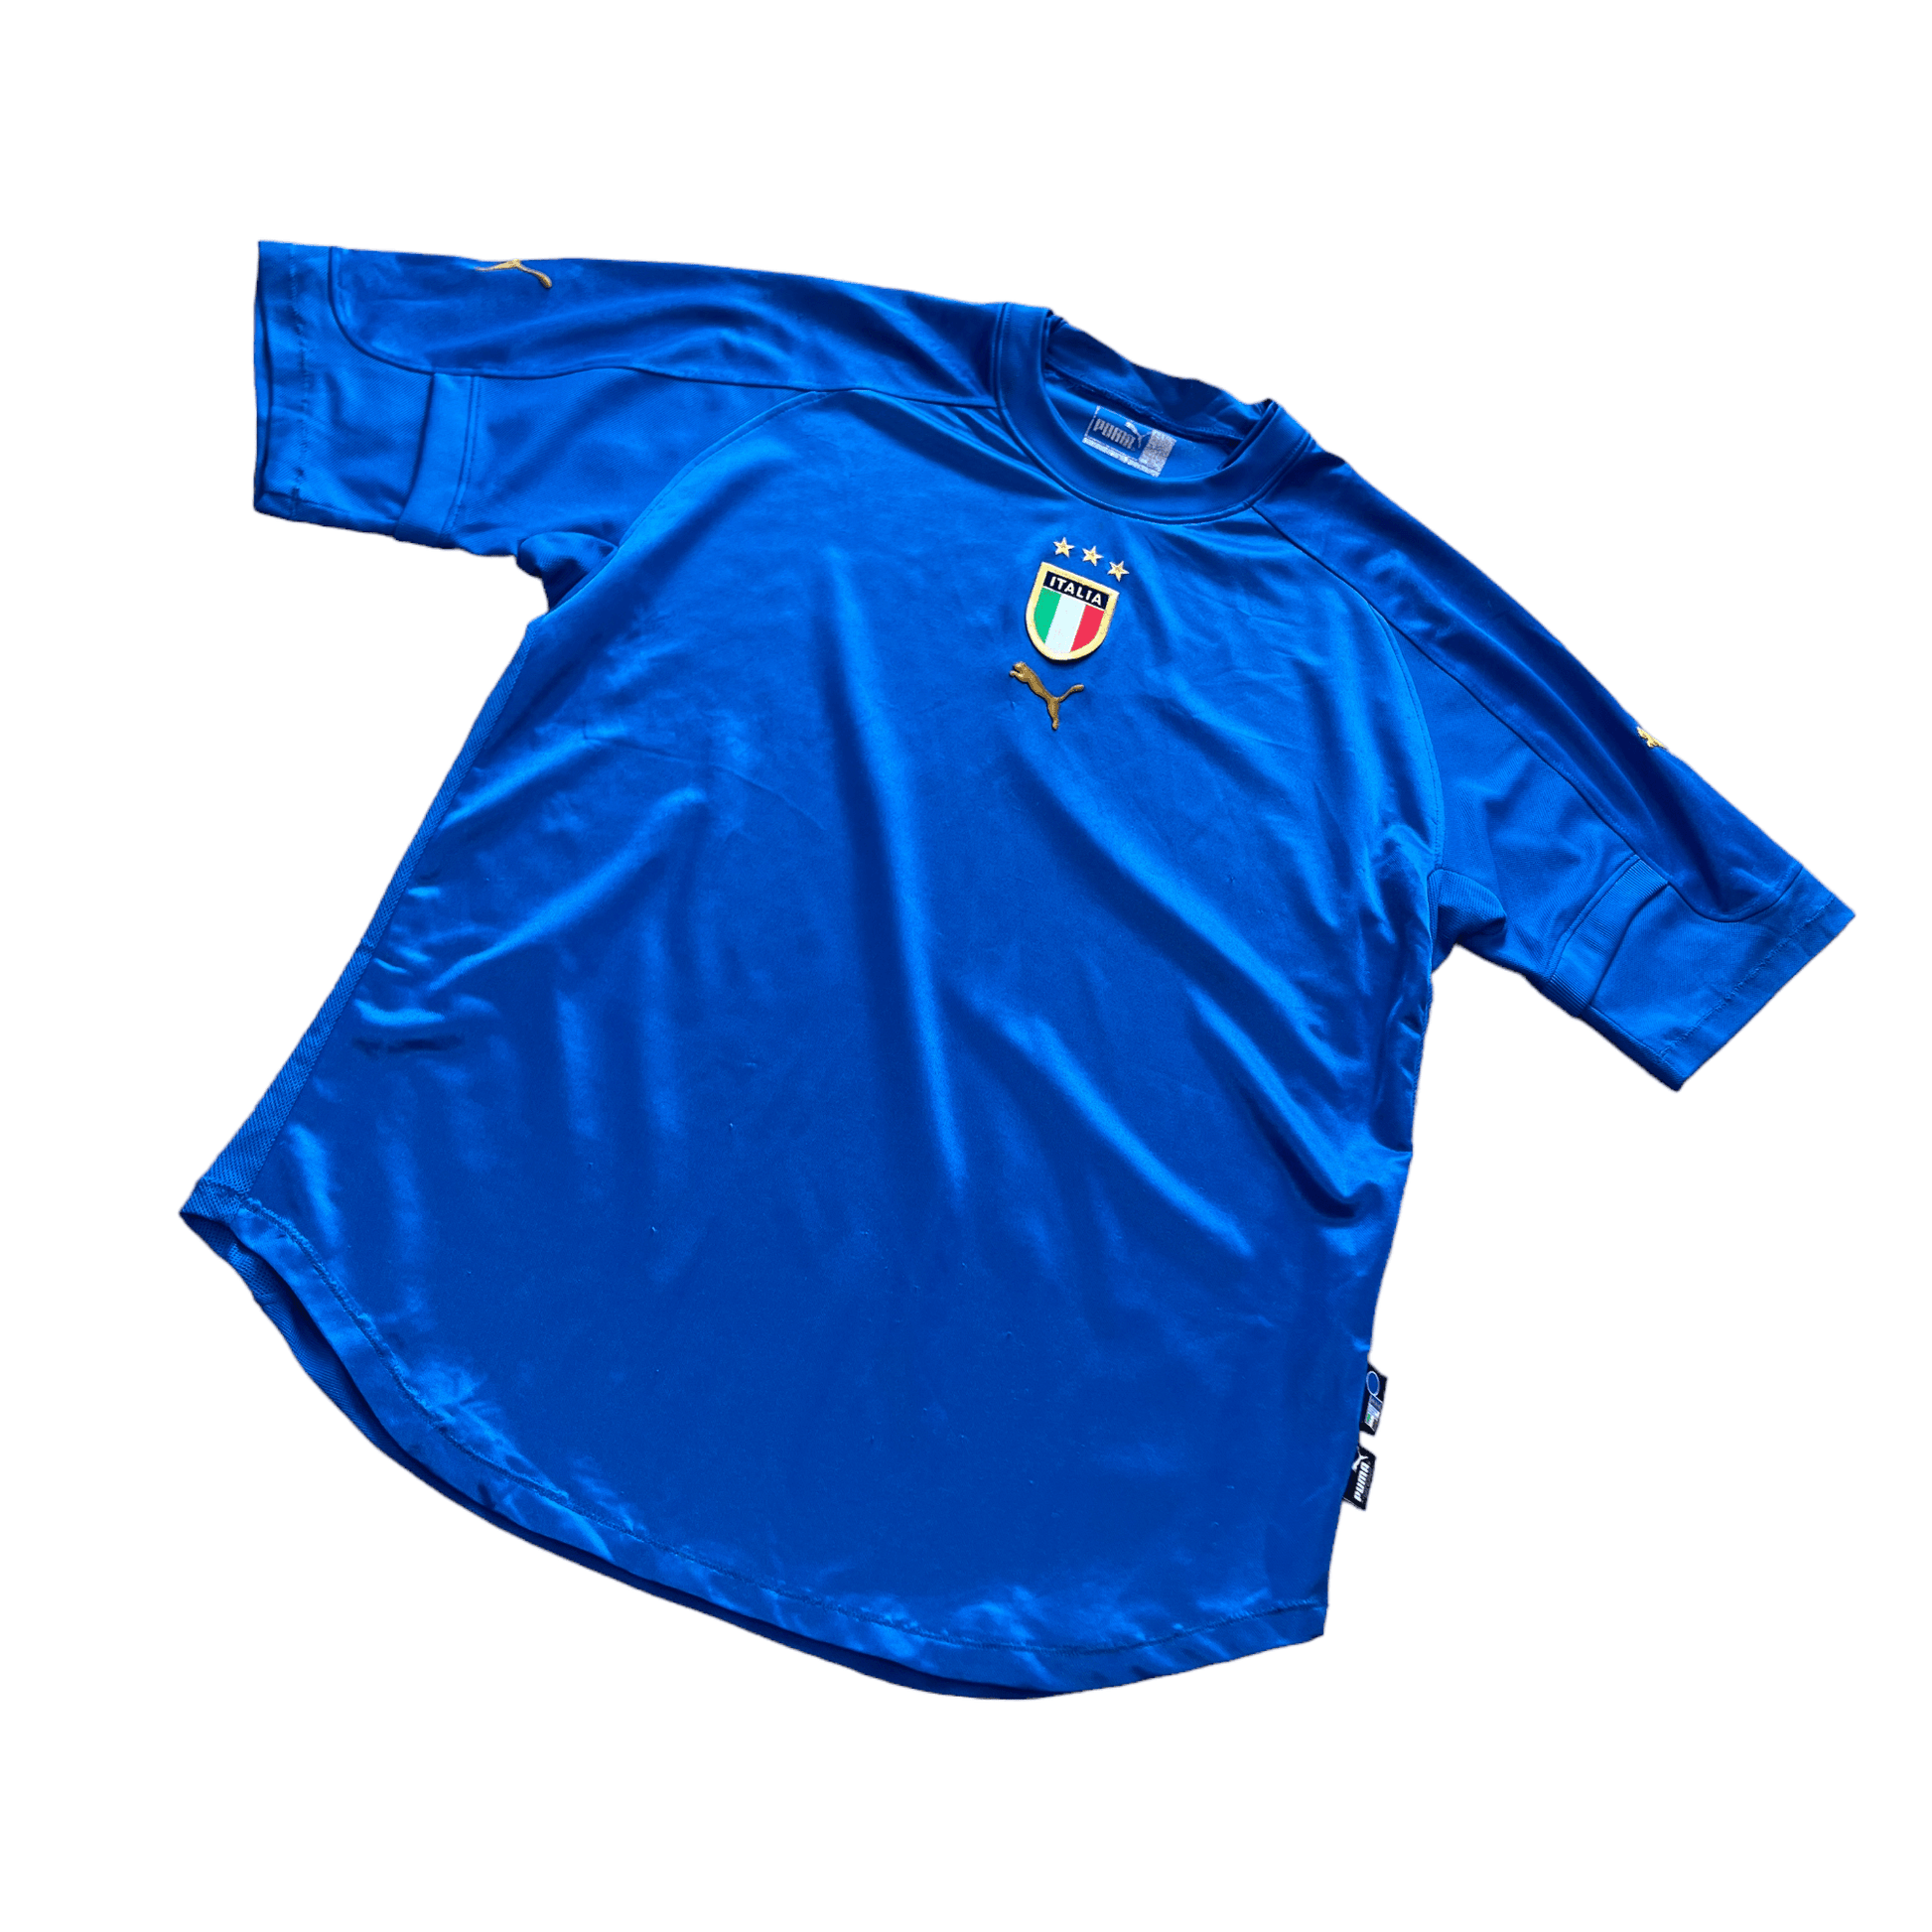 2004-06 Blue Puma Italy Home Shirt - Large - The Streetwear Studio